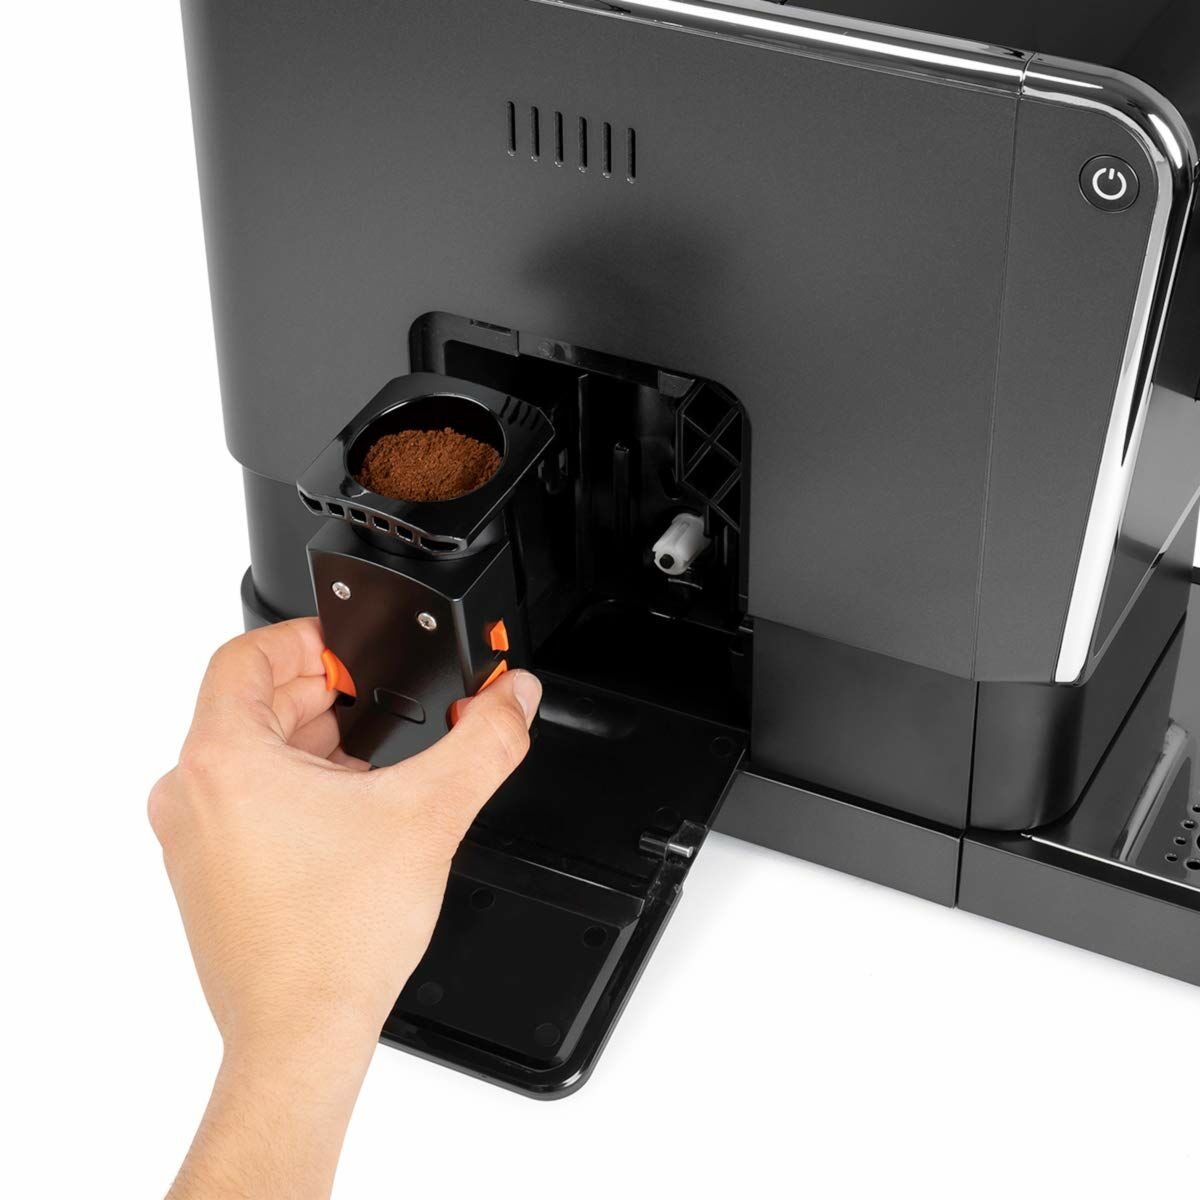 Elektrische Kaffeemaschine Solac CE4810 1,2 L - CA International 